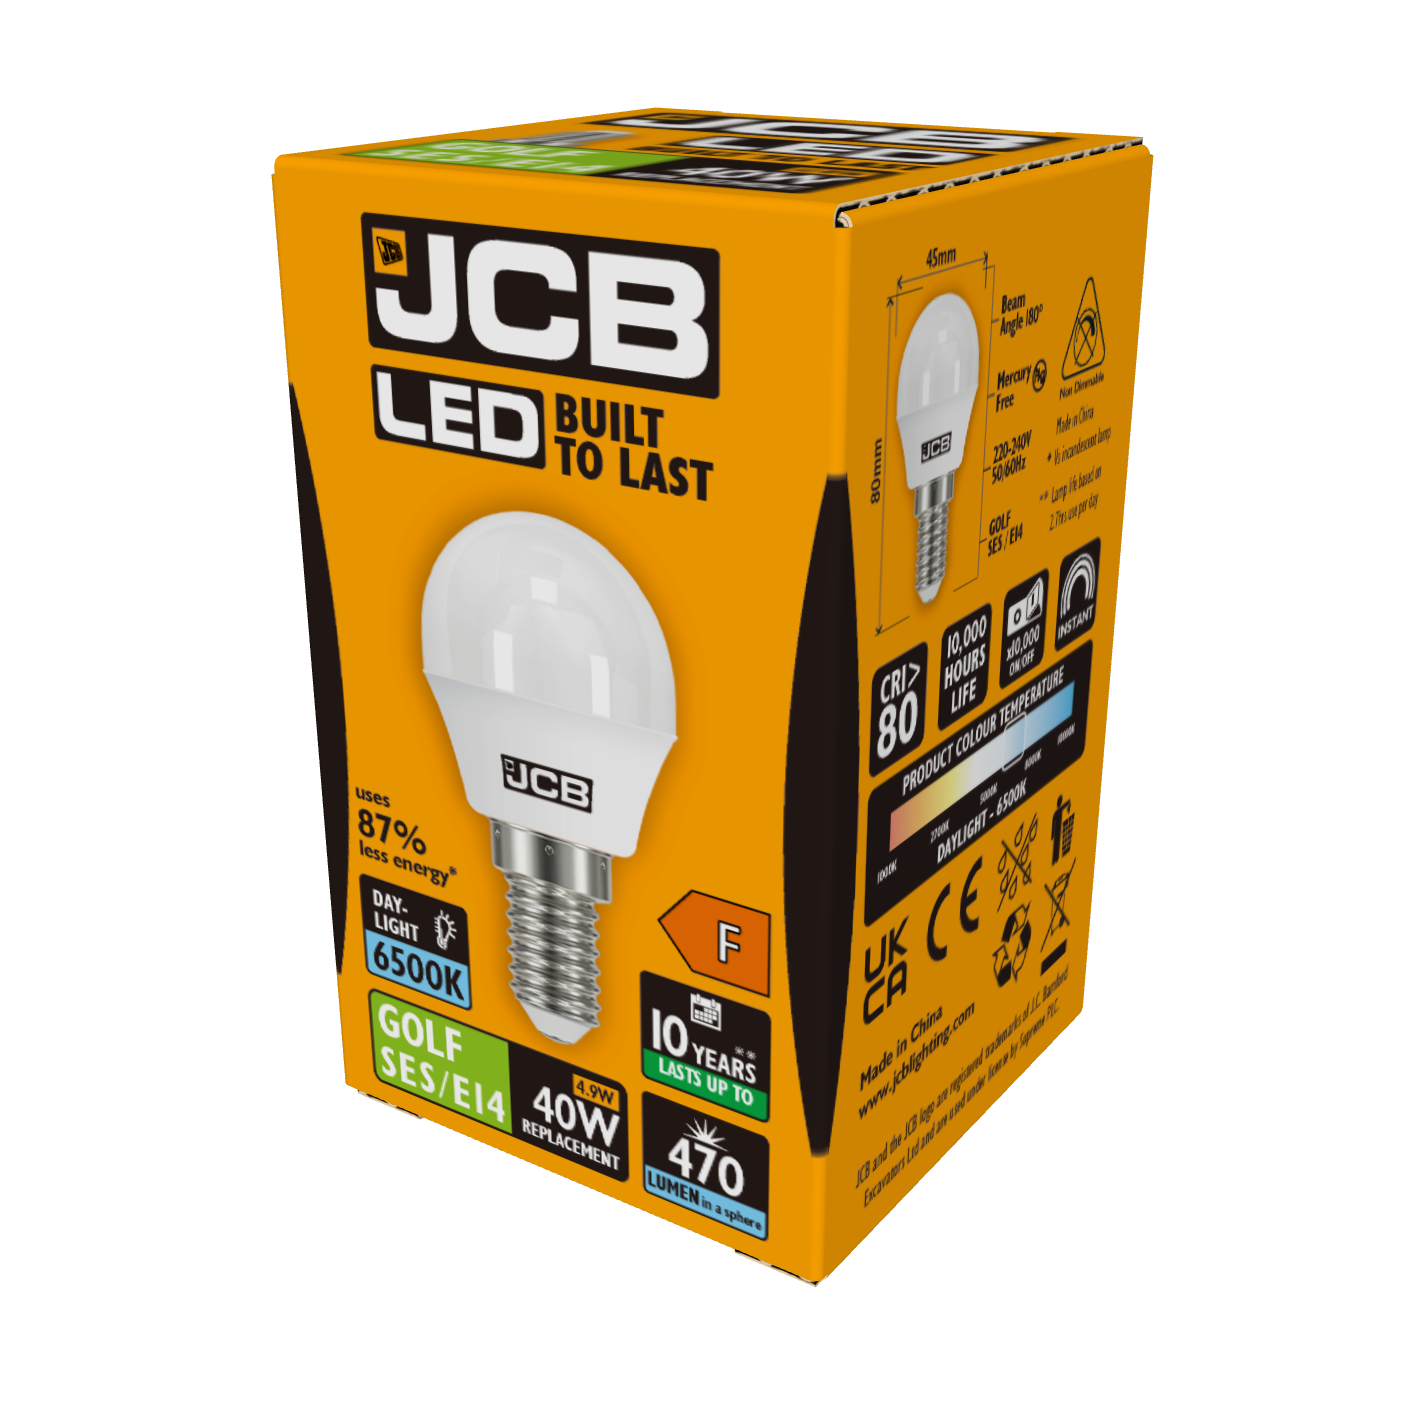 JCB LED Golf E14 (SES) 470lm 4.9W 6,500K (Daylight), Box of 1